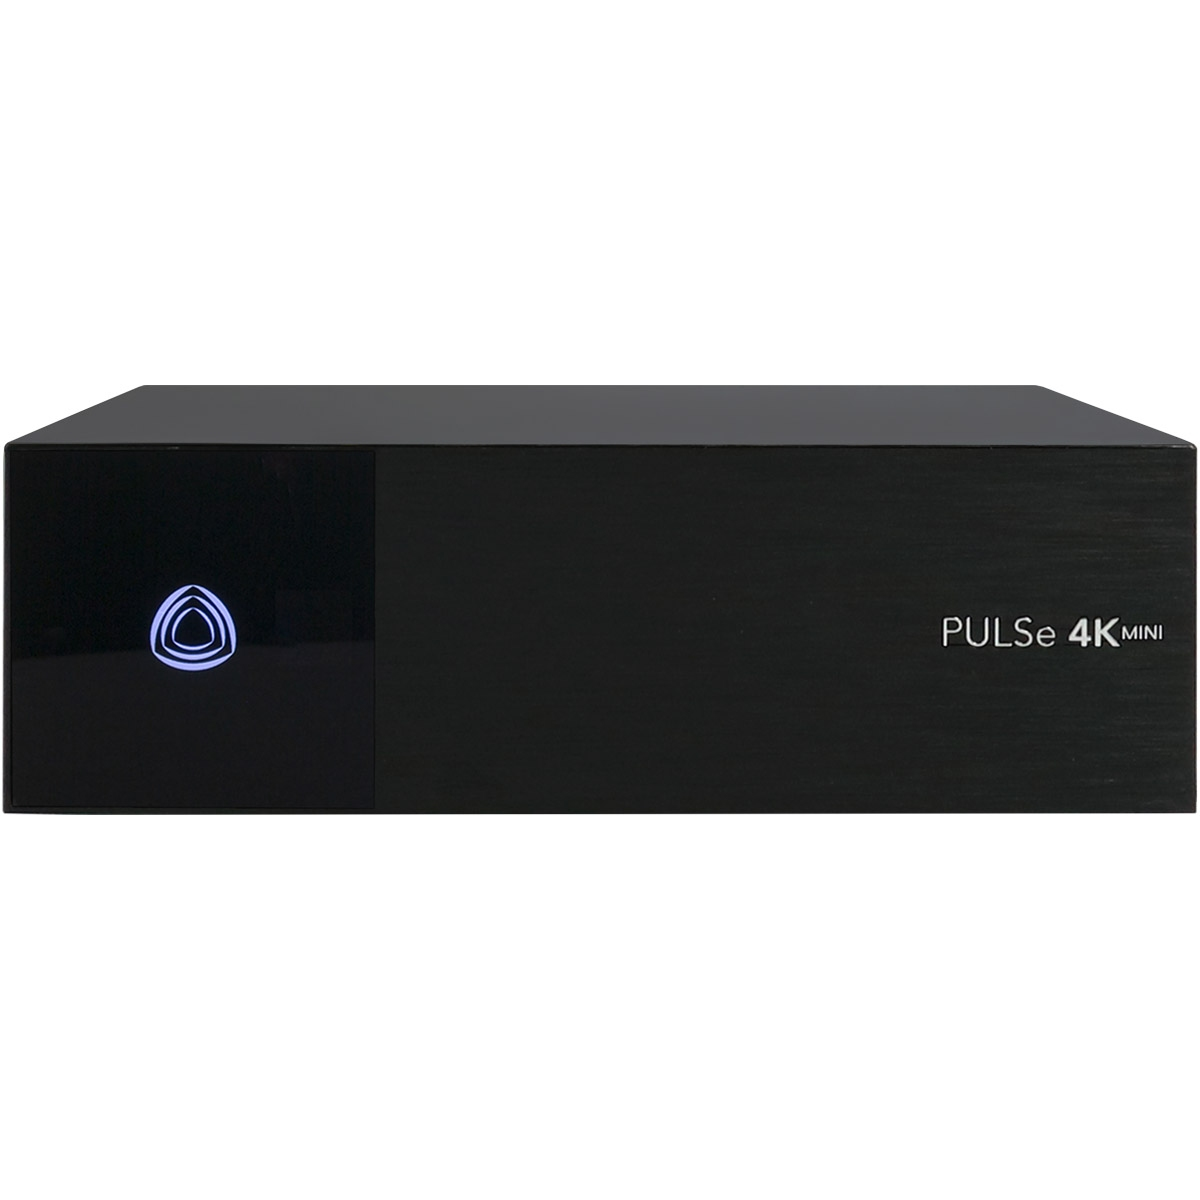 AB-COM PULSe 4K Mini UHD (PVR-Funktion=optional, Linux CI 64GB HDR10 LAN MicroSD Receiver 4K UHD schwarz) 1xDVB-S2X Sat-Receiver Sat E2